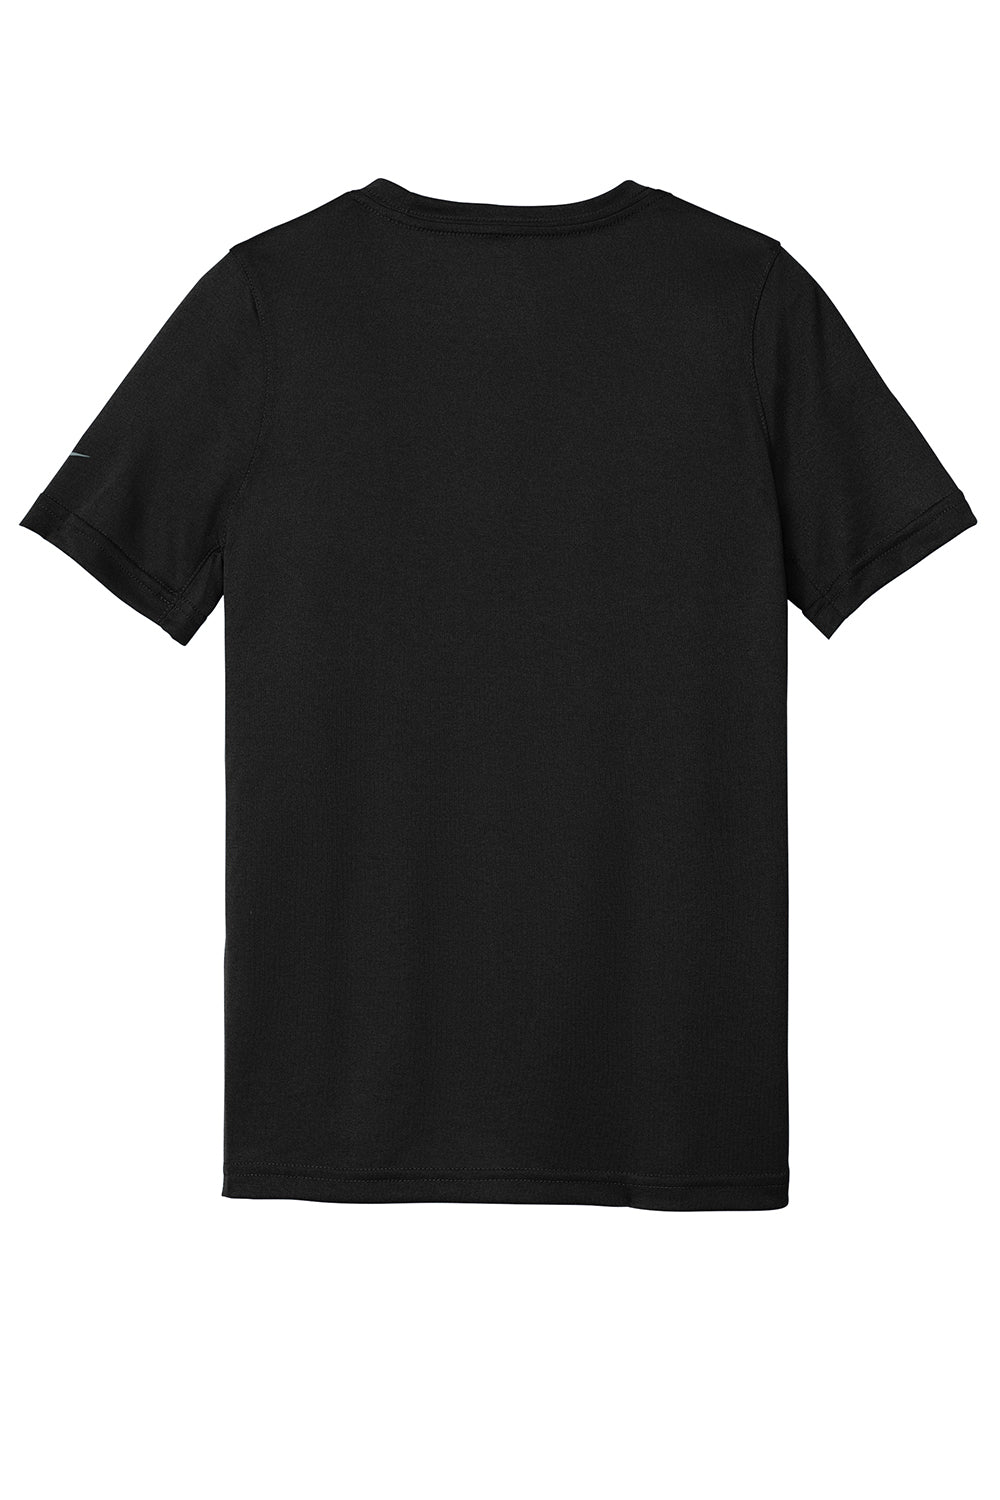 Nike NKDX8787 Youth rLegend Dri-Fit Moisture Wicking Short Sleeve Crewneck T-Shirt Black Flat Back